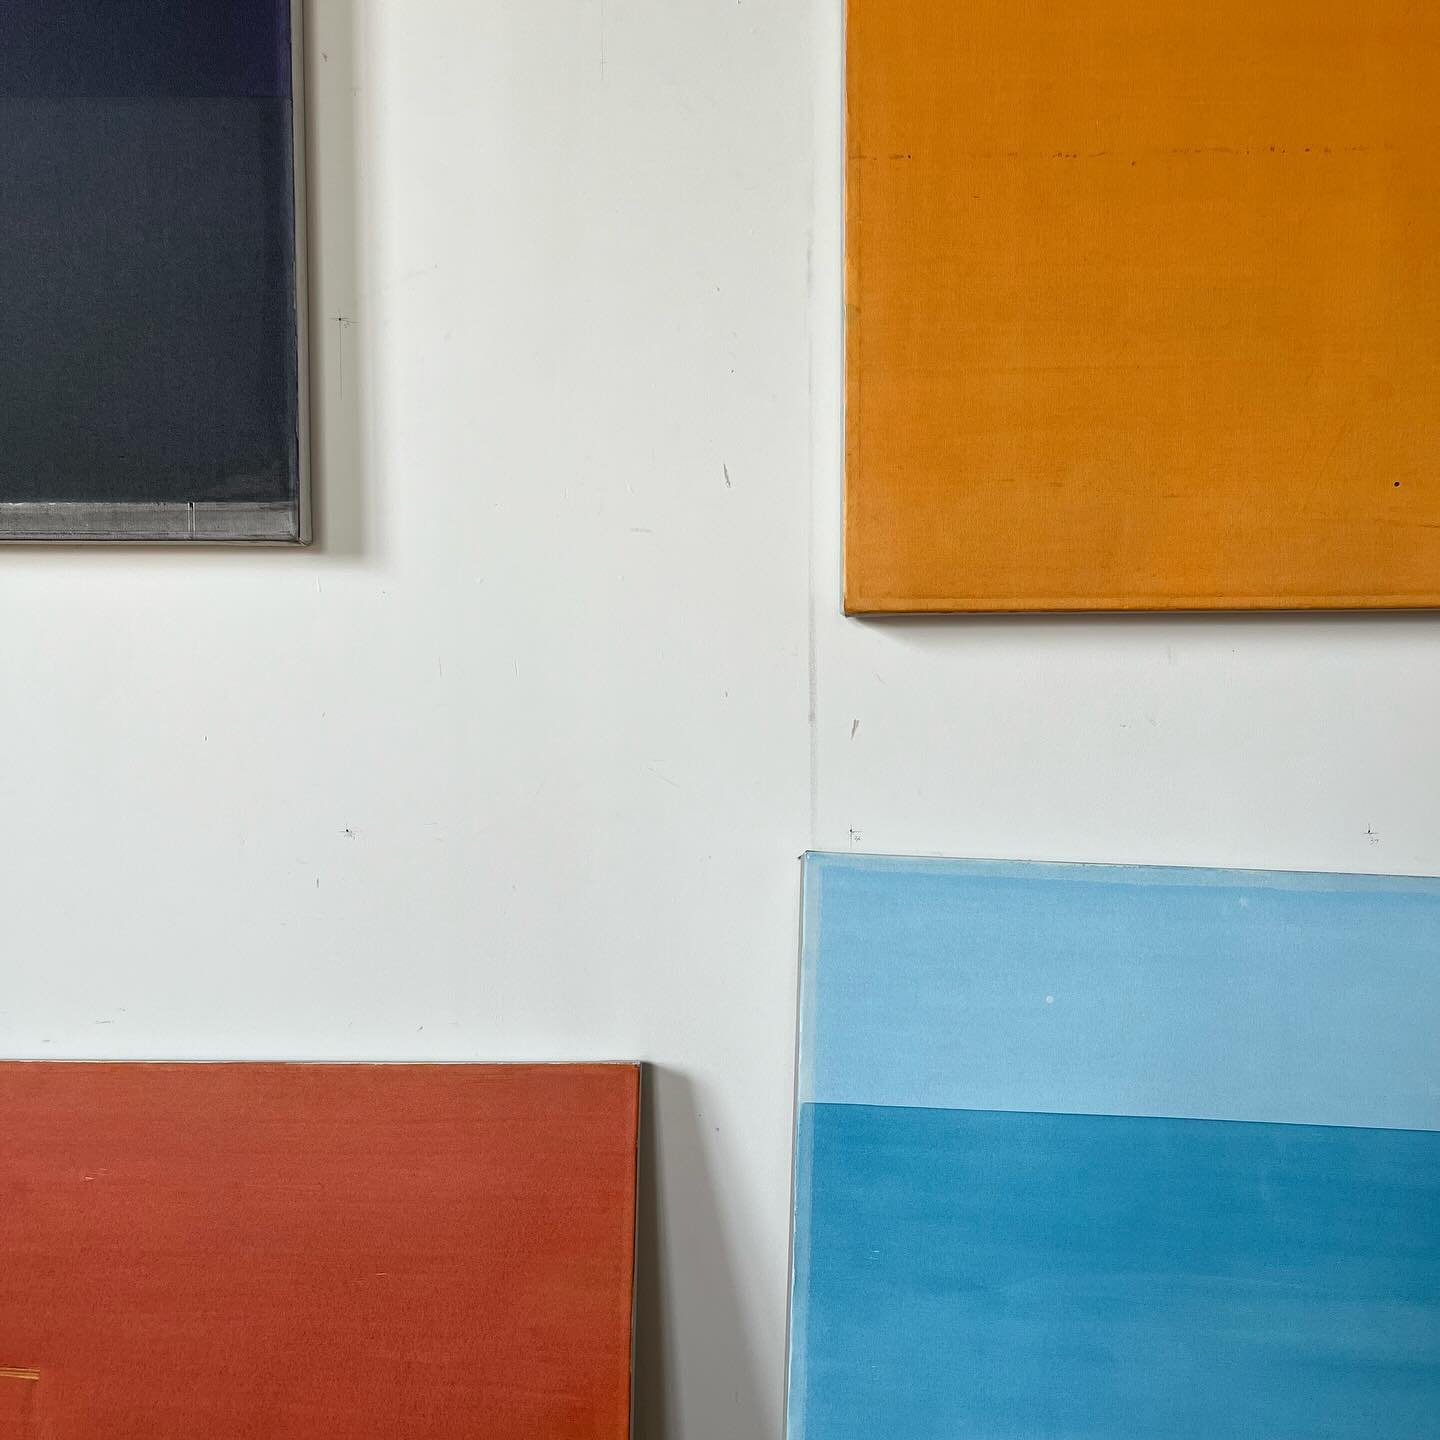 Studio details of paintings in progress.
.
.
.
#douglaswitmer #contemporaryart #contemporarypainting #contemporarydrawing #abstractpainting #abstractdrawing #geometricpainting #nonobjective #geometricabstraction #reductivepainting #reductiveart #redu